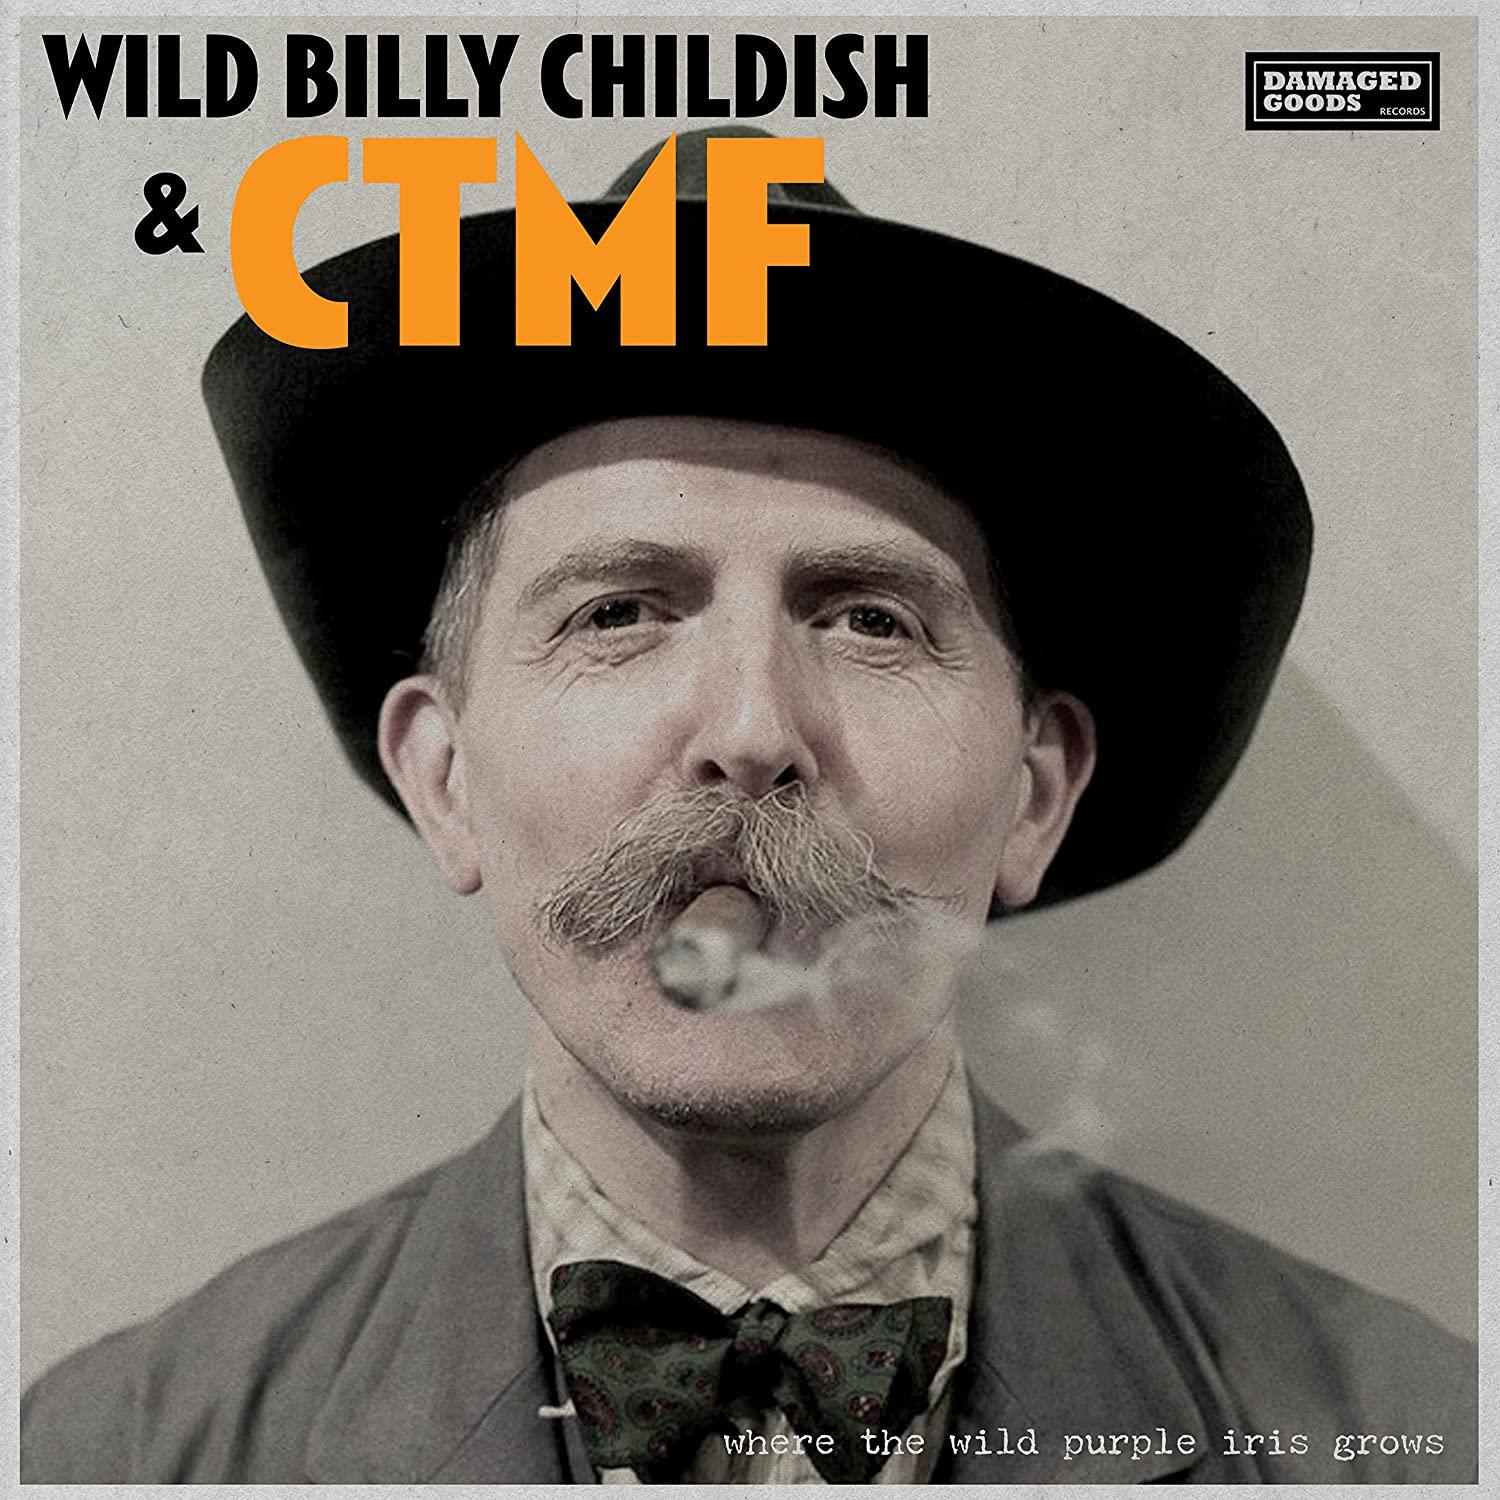 Wild Billy Childish & CTMF Where Iris Wild Grows - (CD) Purple - The